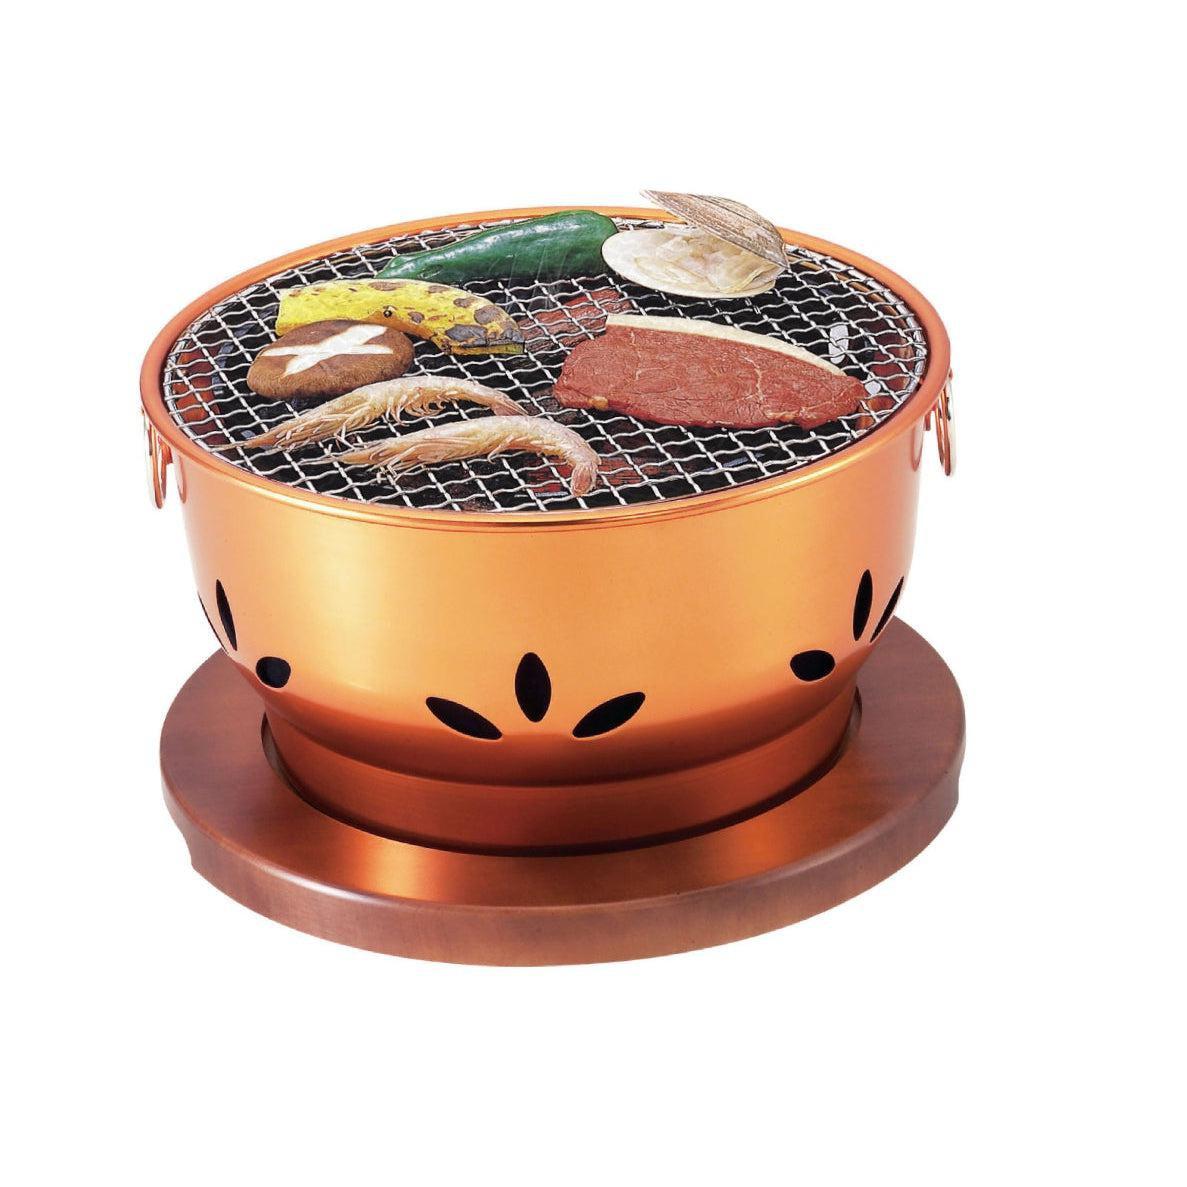 Ikenaga Shichirin Round Charcoal Grill Portable Cast-Iron Hibachi Grill 30cm